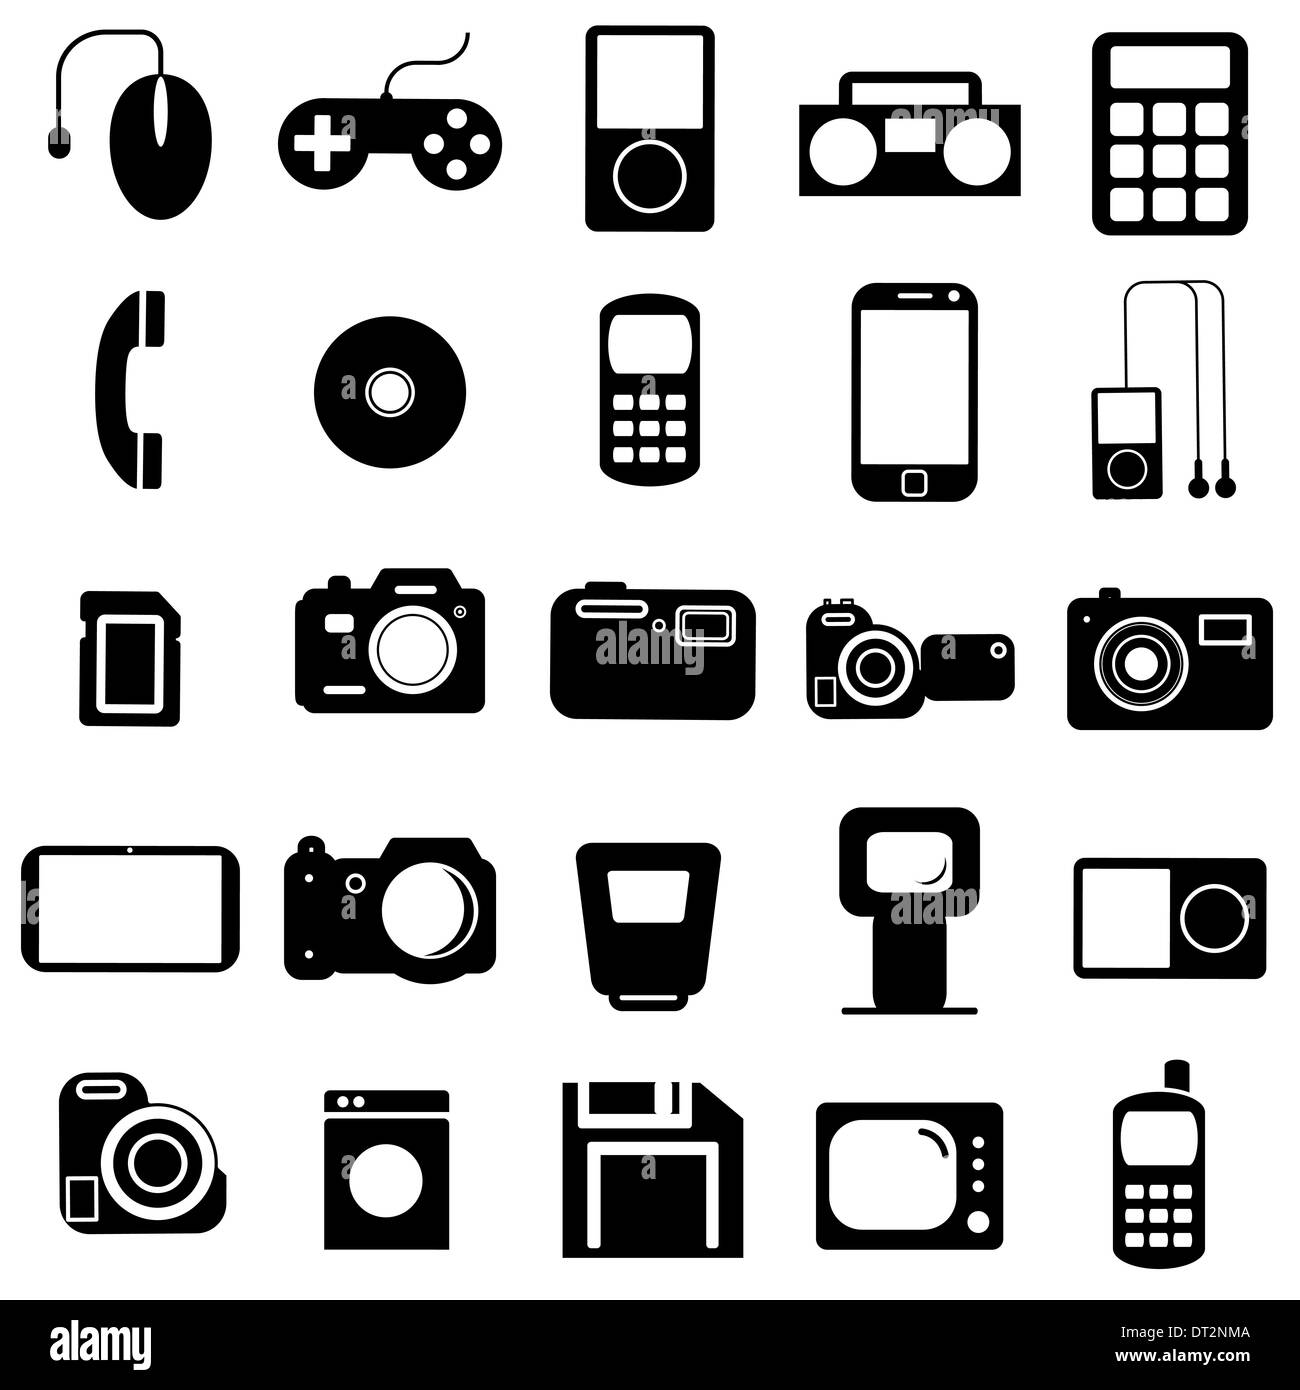 Collection flat icons. Multimedia symbols. Stock Photo